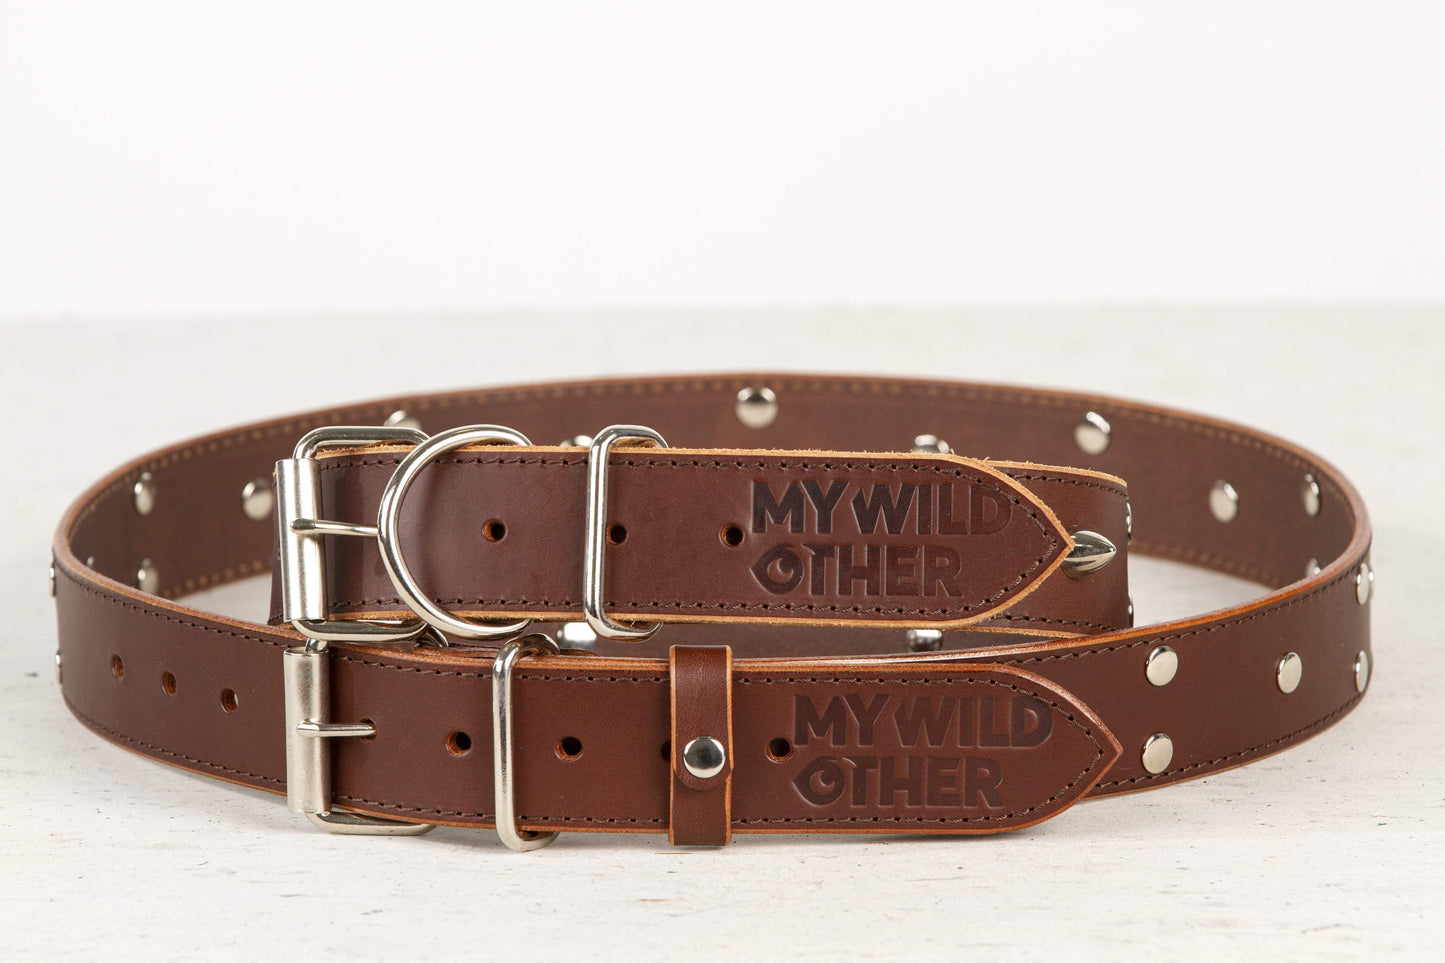 Handmade brown leather STUDDED dog collar - premium dog goods handmade in Europe by animalistus